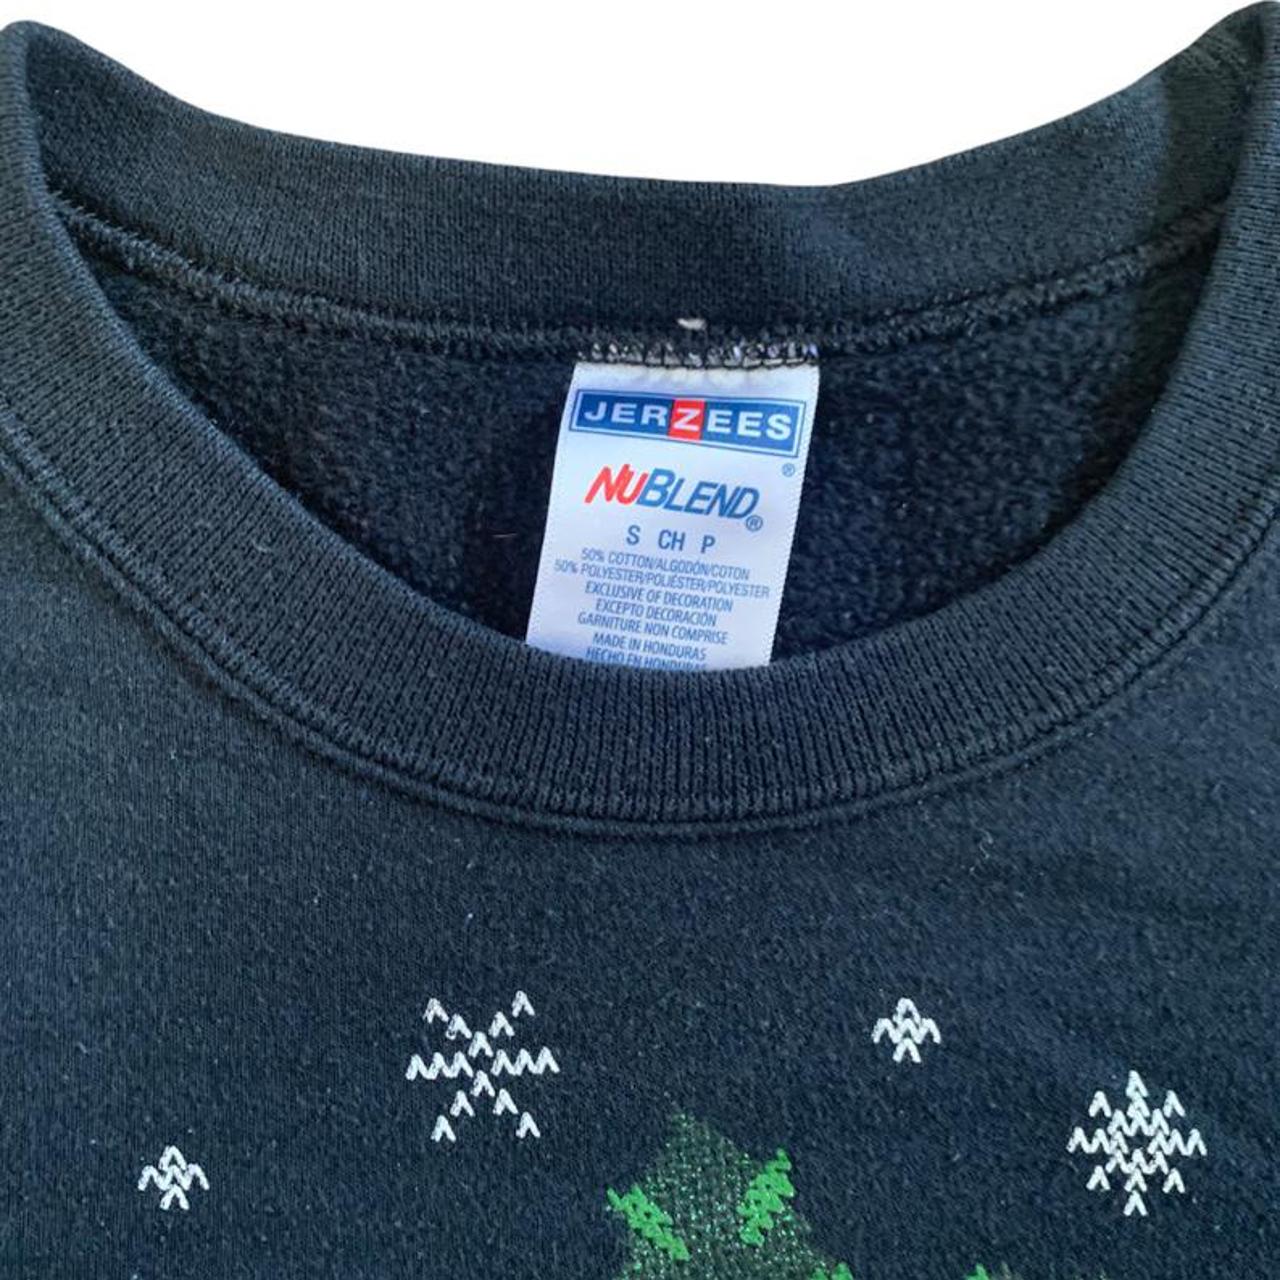 Product Image 2 - Christmas crew neck graphic sweatshirt!

Black